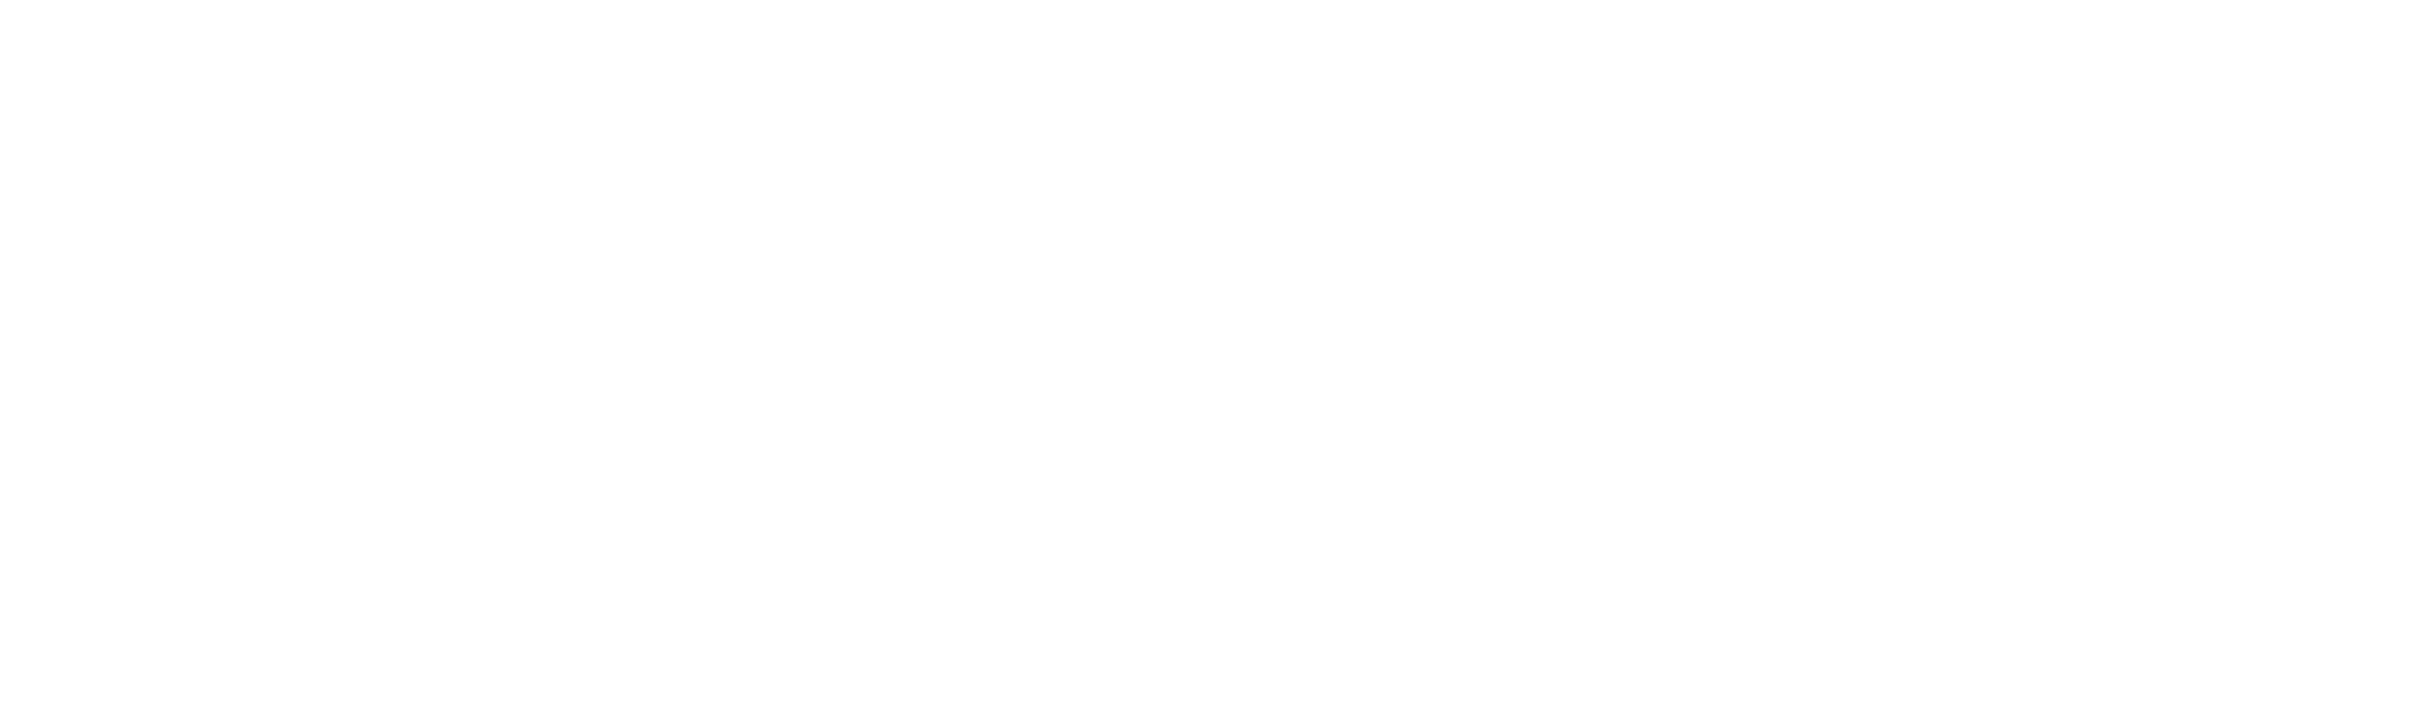 Central Texas Veterinary Specialty & Emergency Hospital